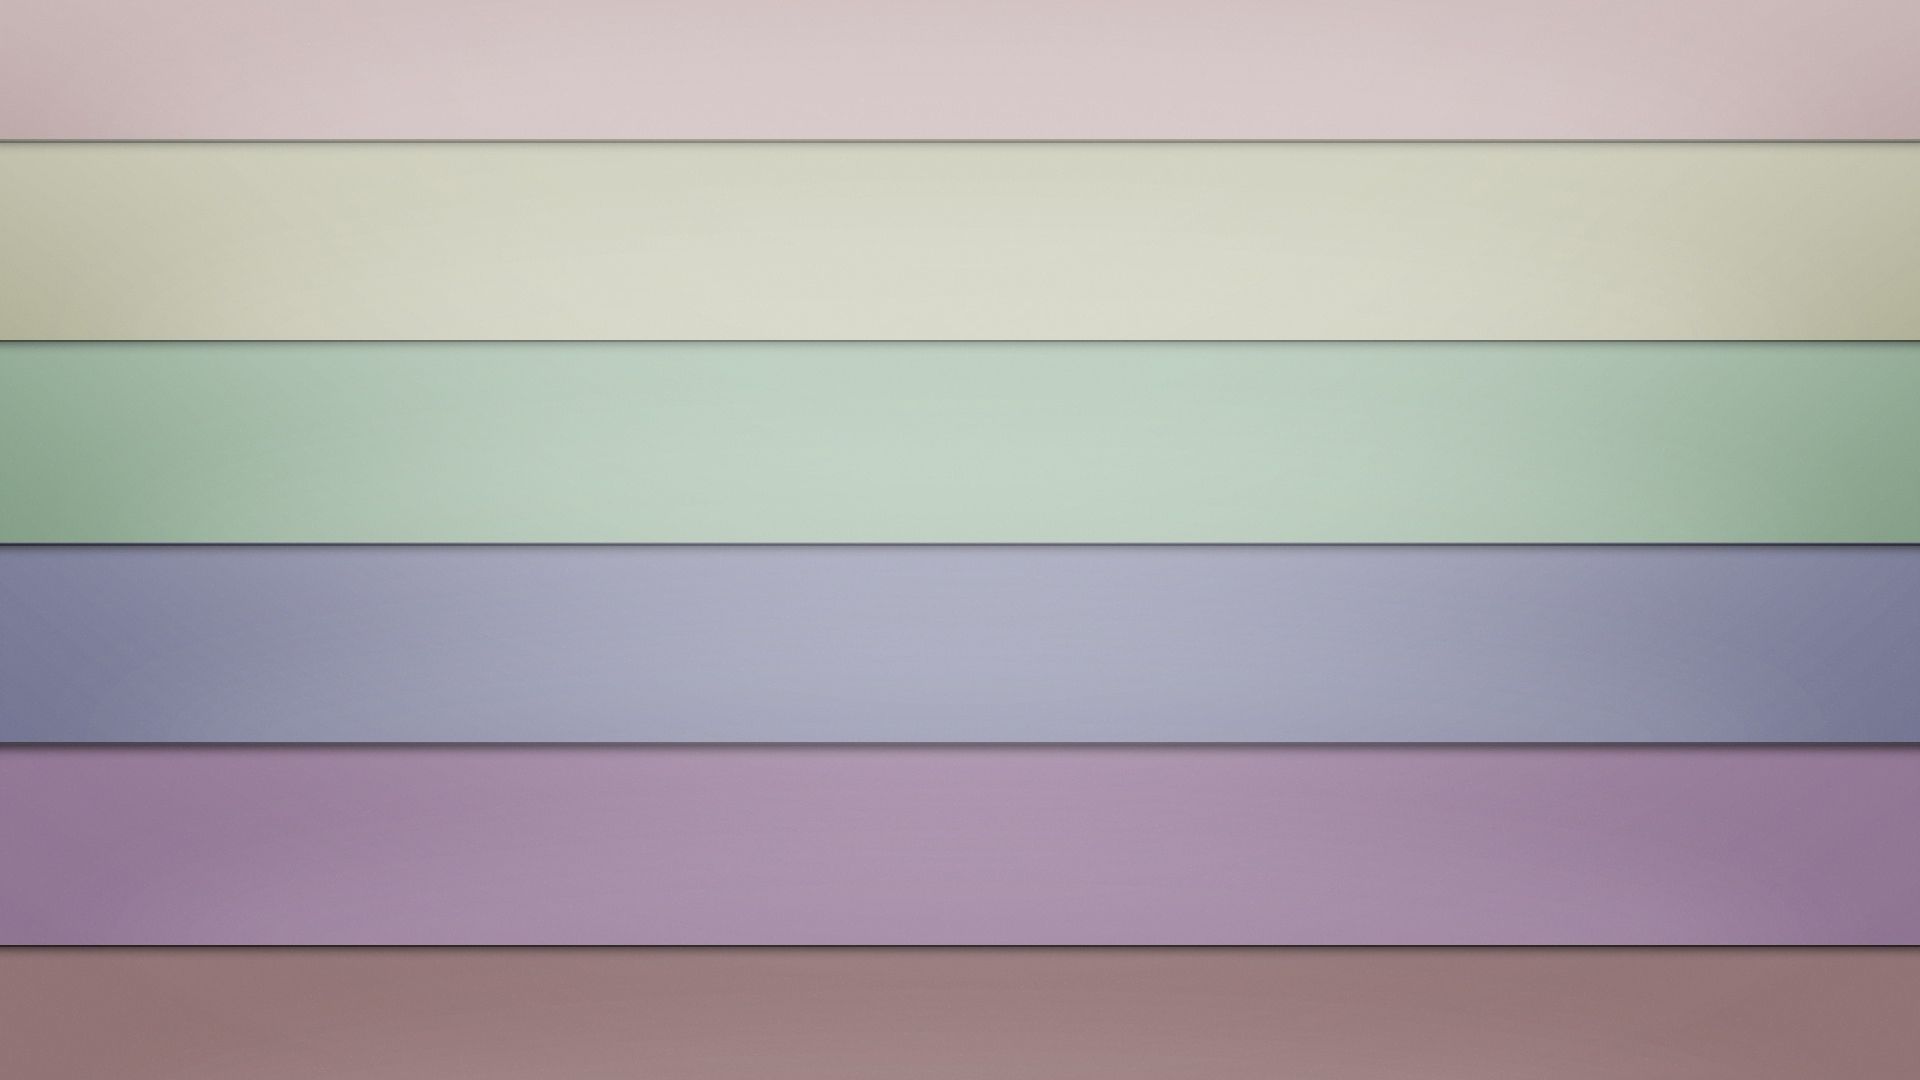 Pastel Colour Wallpapers